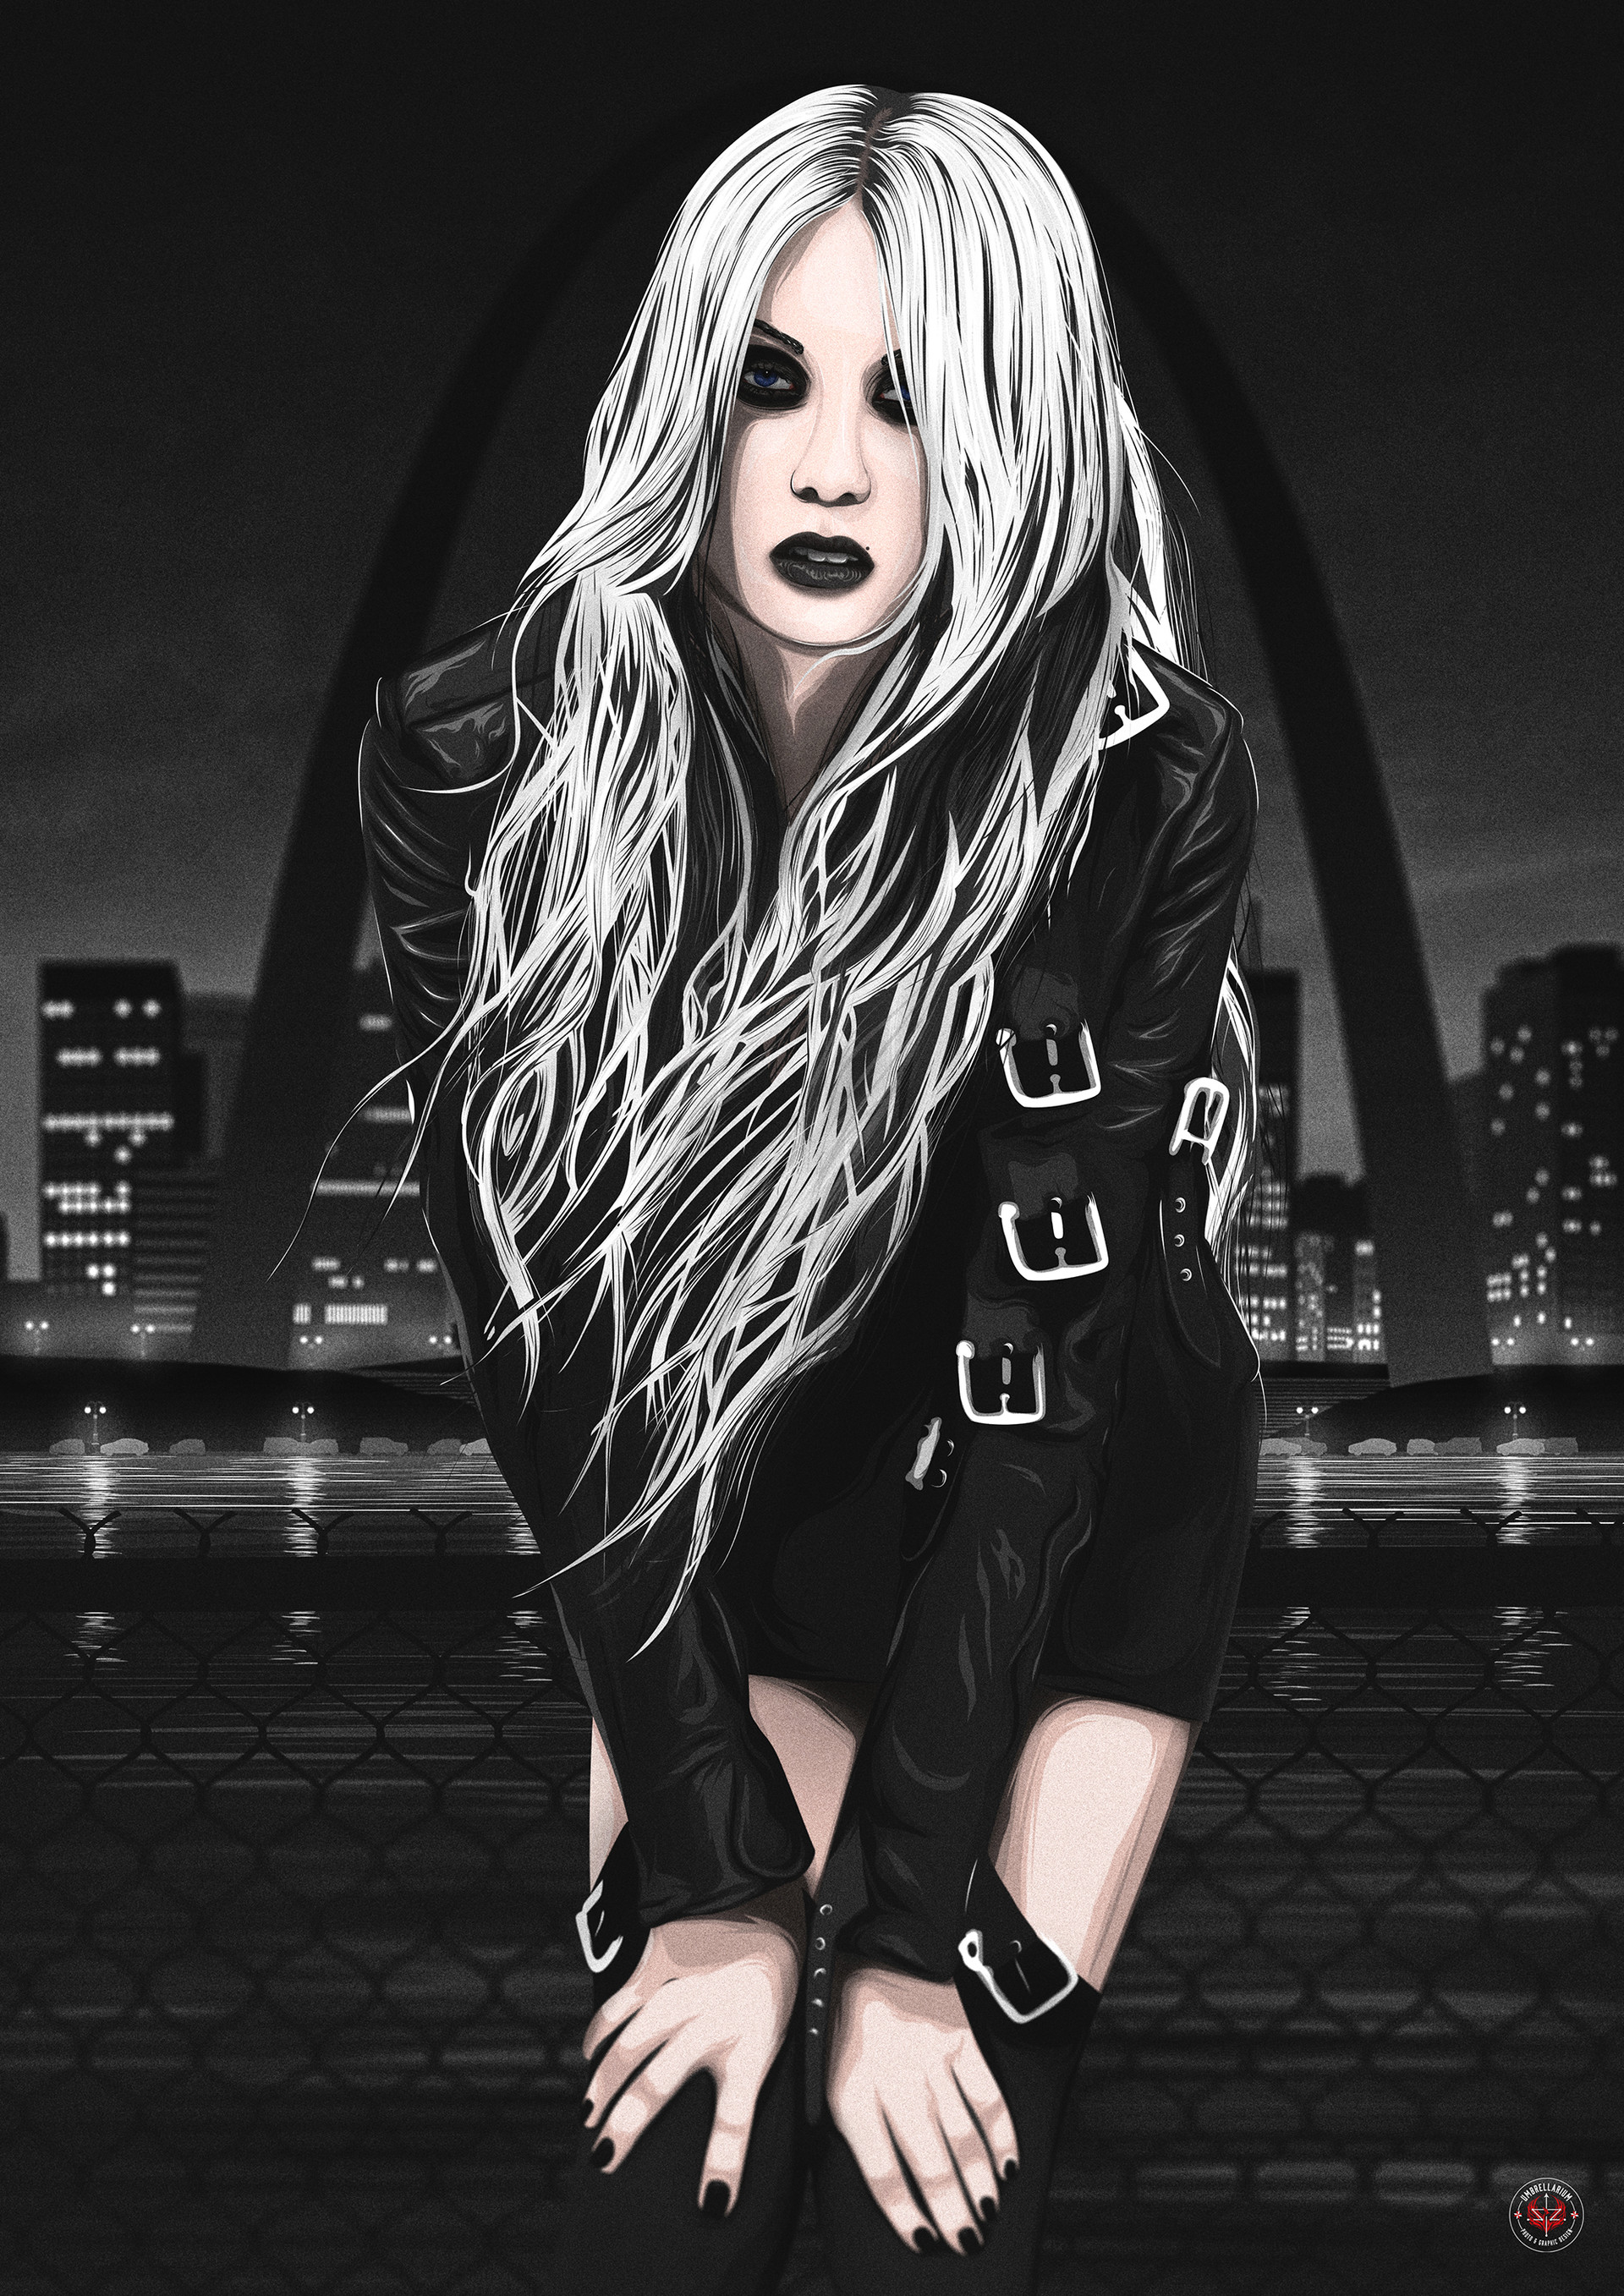 Blond Hair Black Jackets The Pretty Reckless Taylor Momsen Music Fan Art Artwork Digital Art Black C 1920x2715